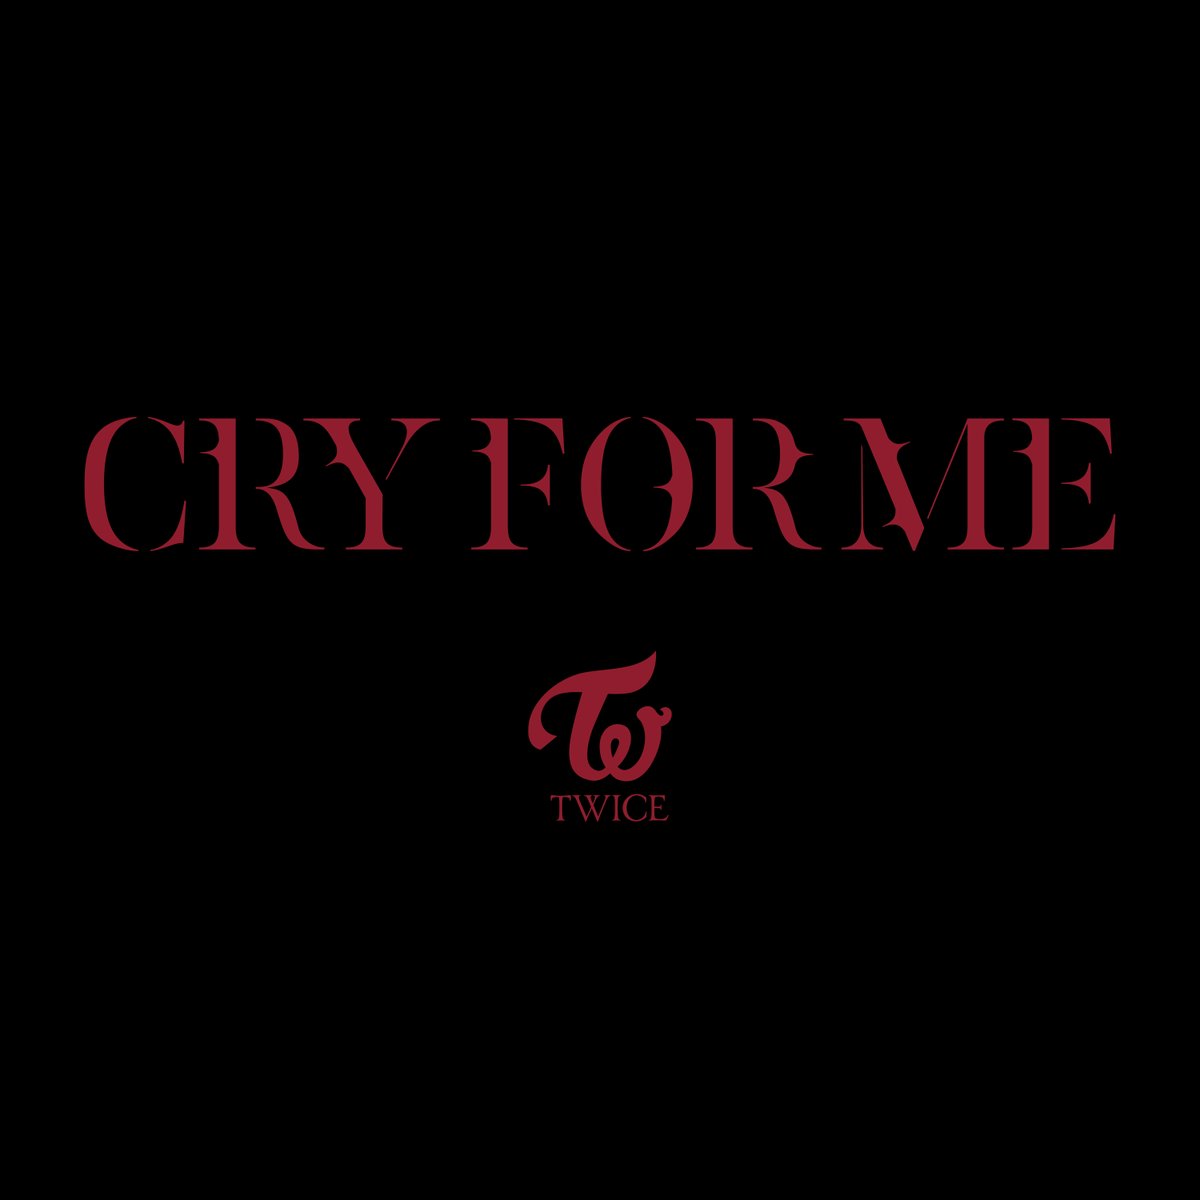 Twice Twice Cry For Me Pre Save On Spotify Now T Co Grdnj6sfur Twice 트와이스 Cryforme T Co Tvav4zpdzs Twitter